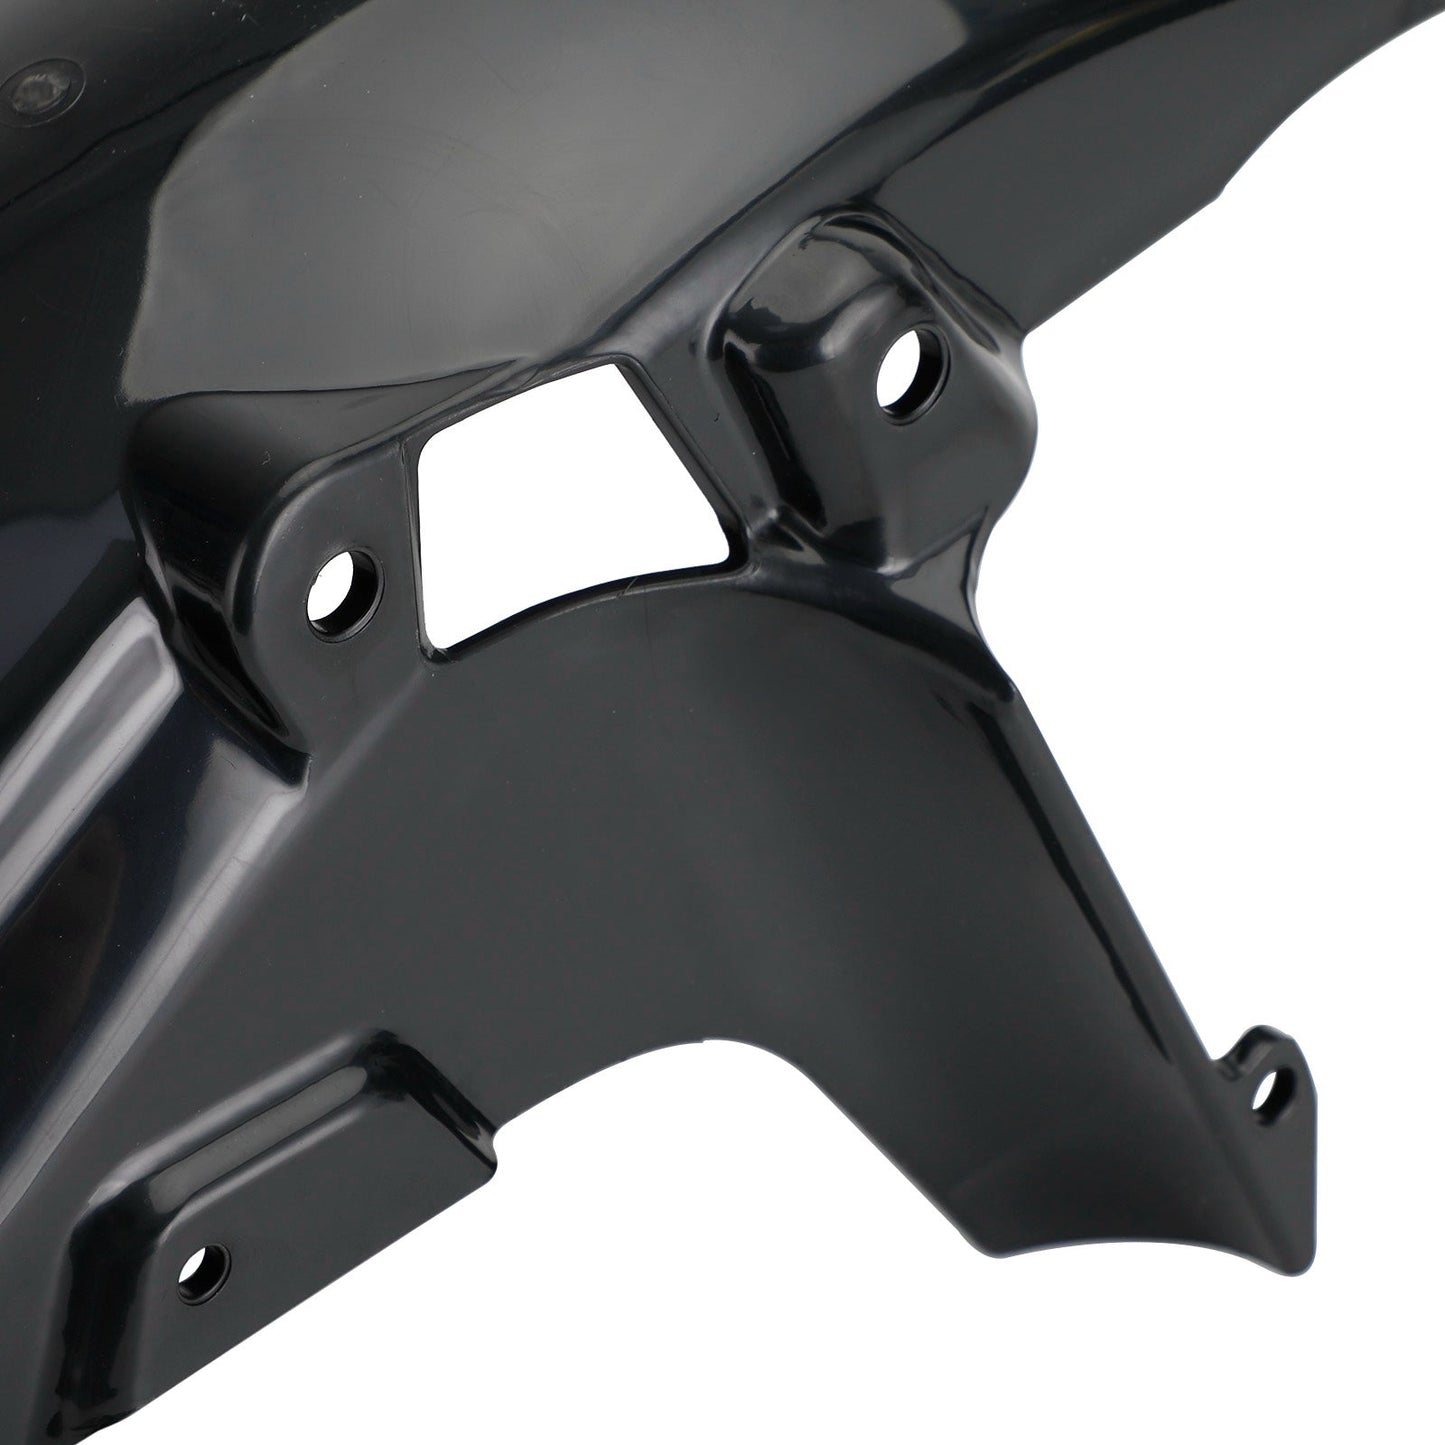 Yamaha XSR900 2016-2021 Bodywork Fairing Injection Molding Unpainted